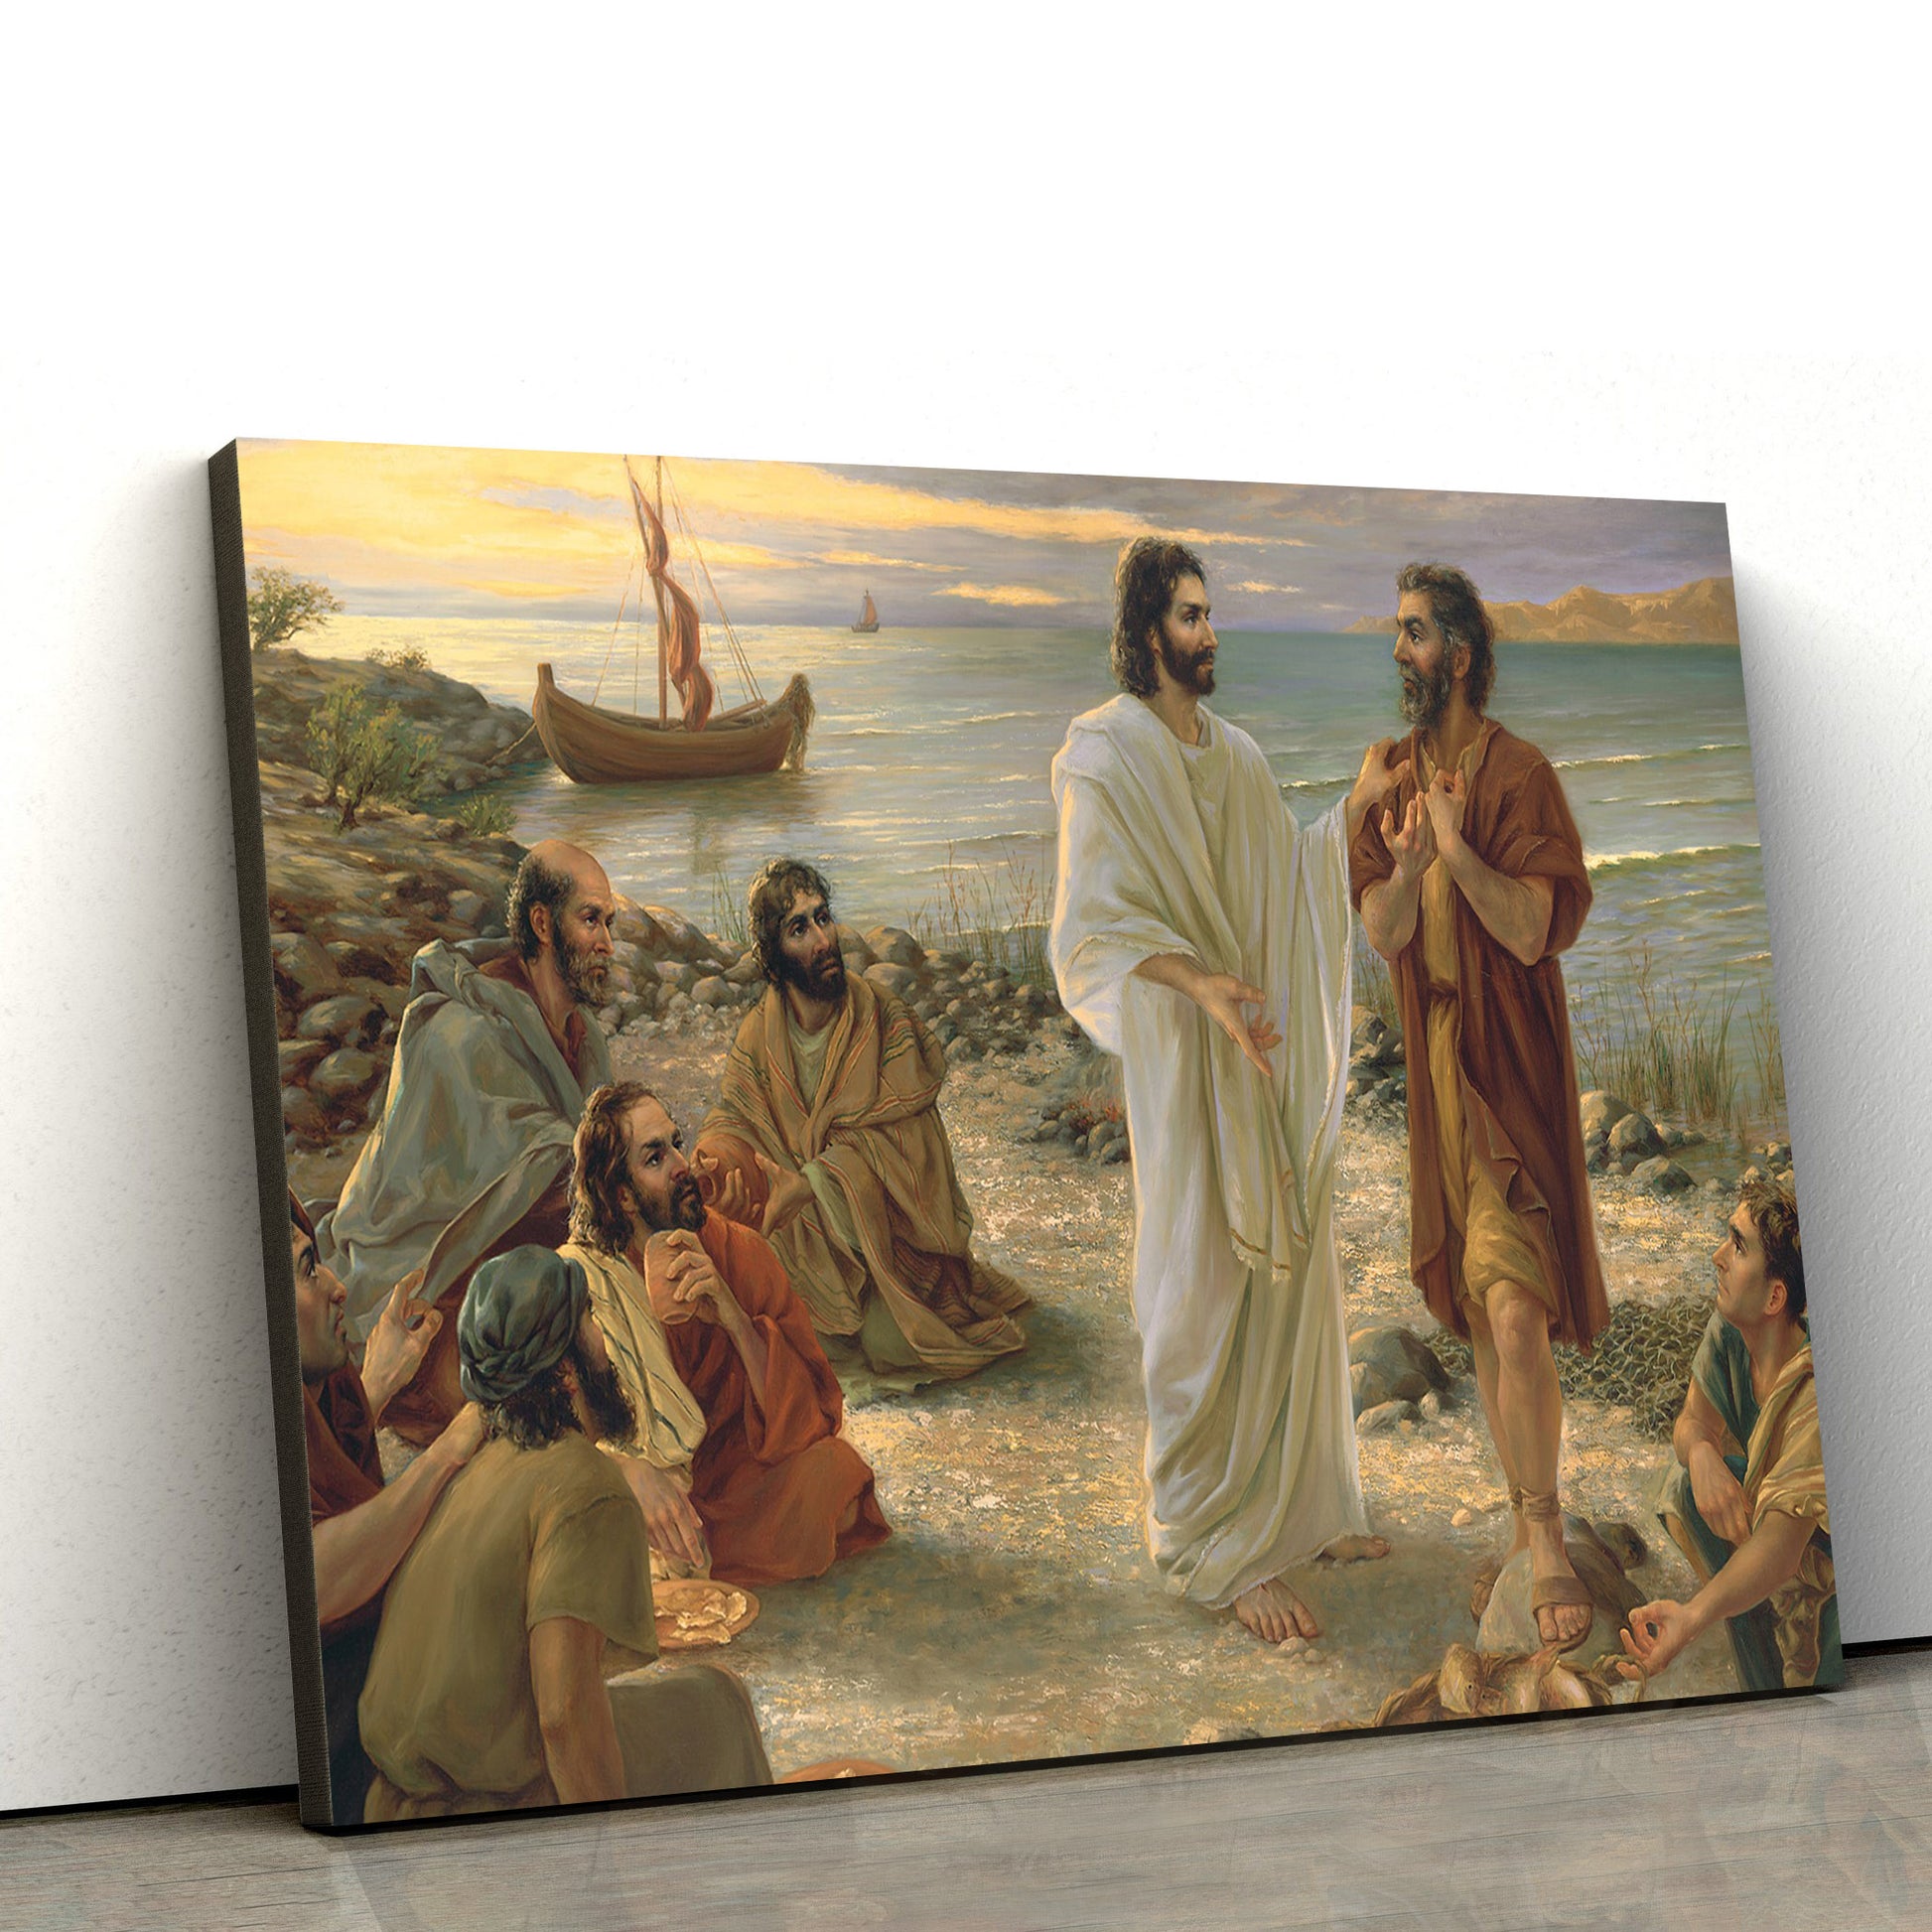 Jesus Christ And The Apostles - Jesus Canvas Wall Art - Christian Wall Art